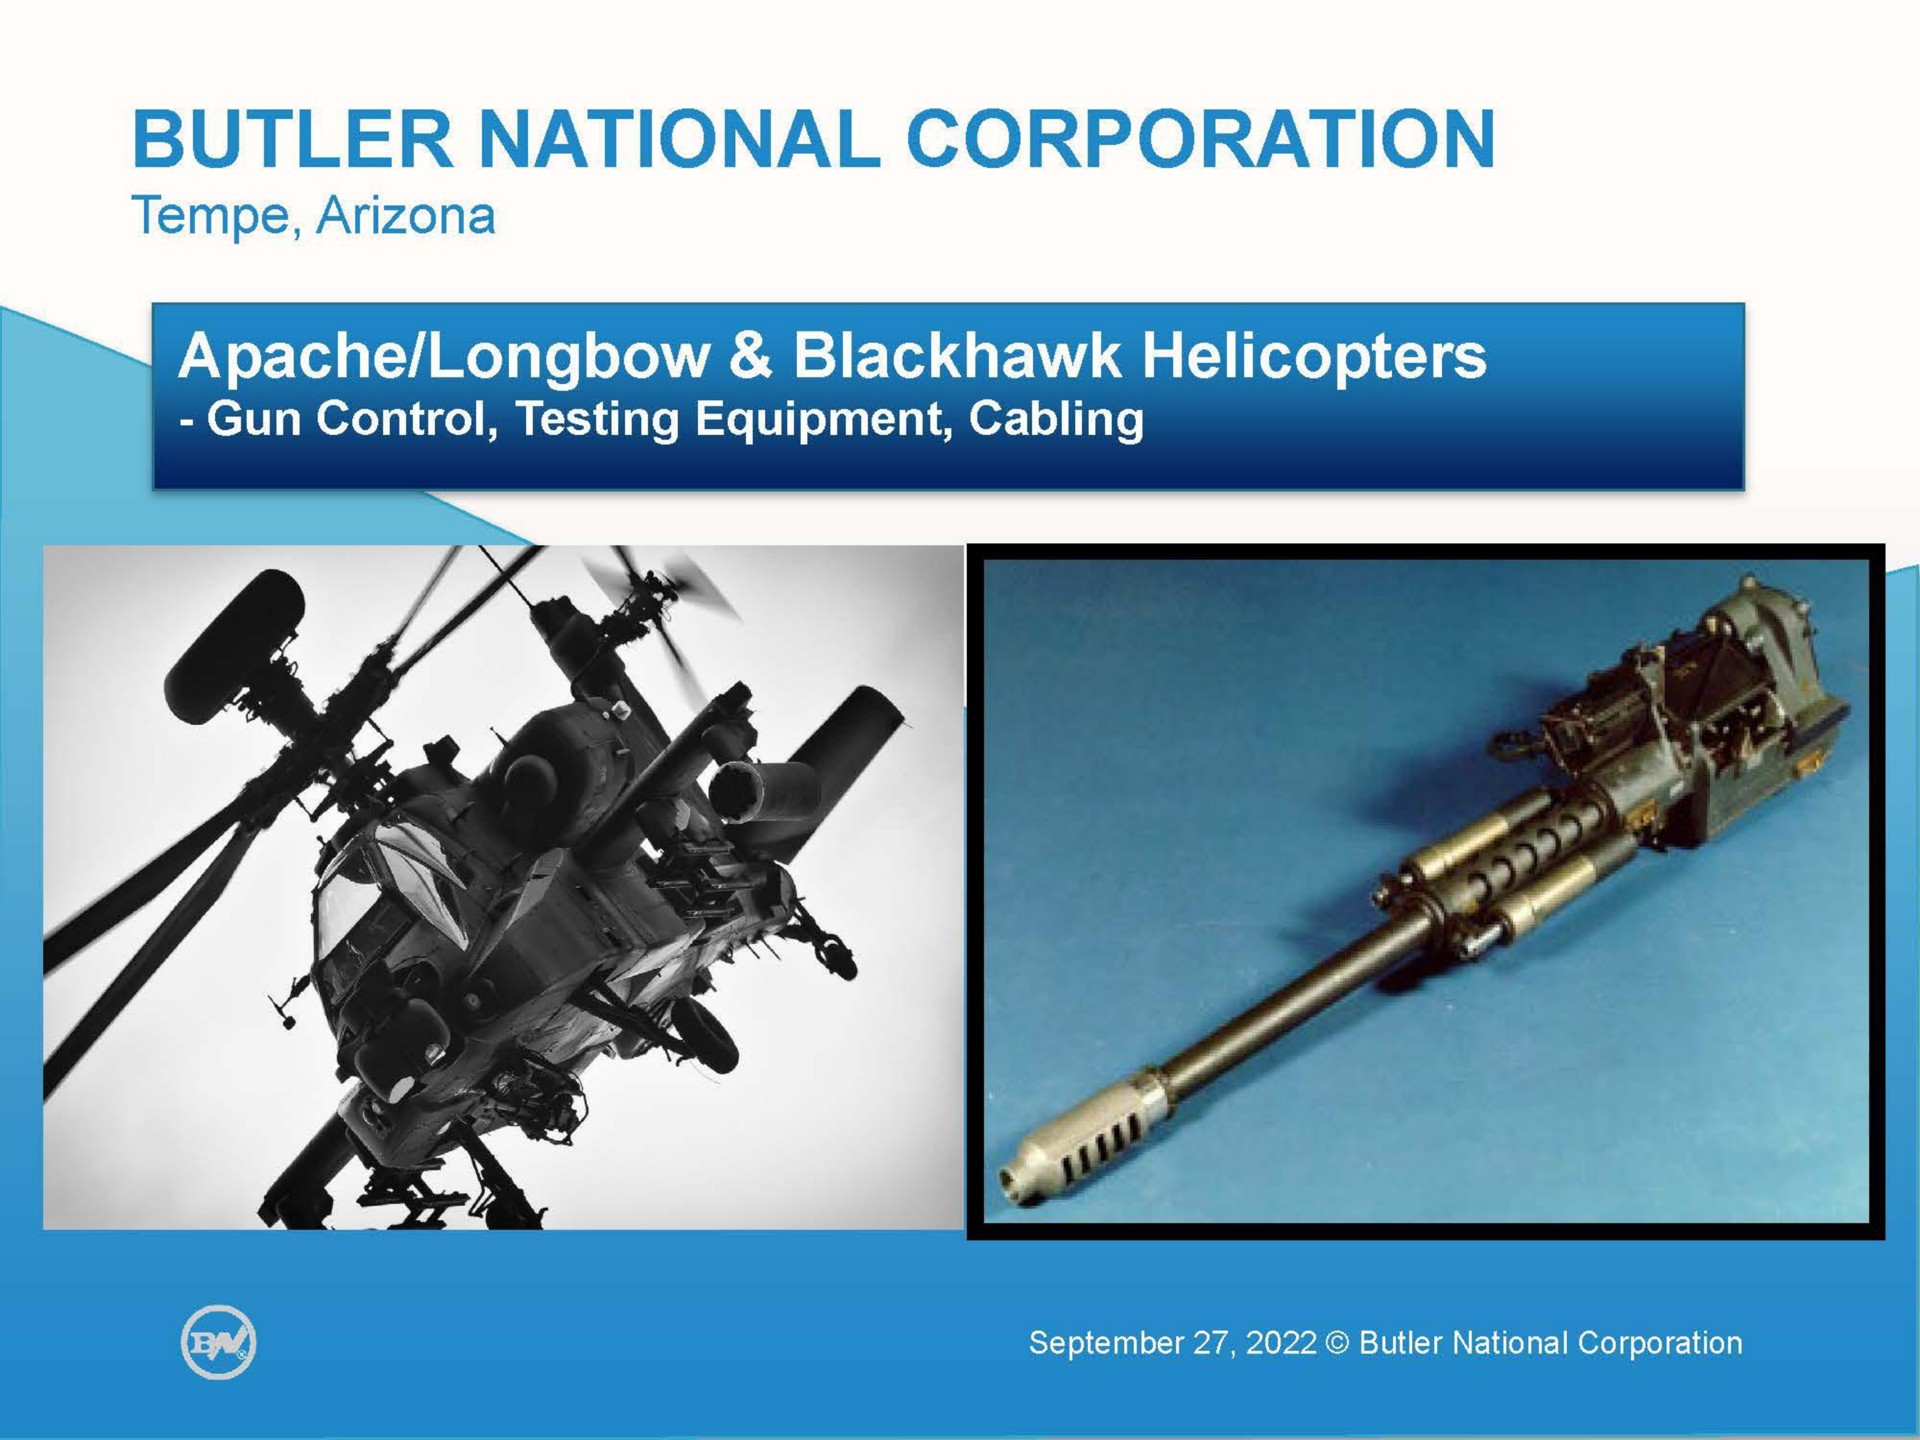 butler national corporation | Butler National Corporation